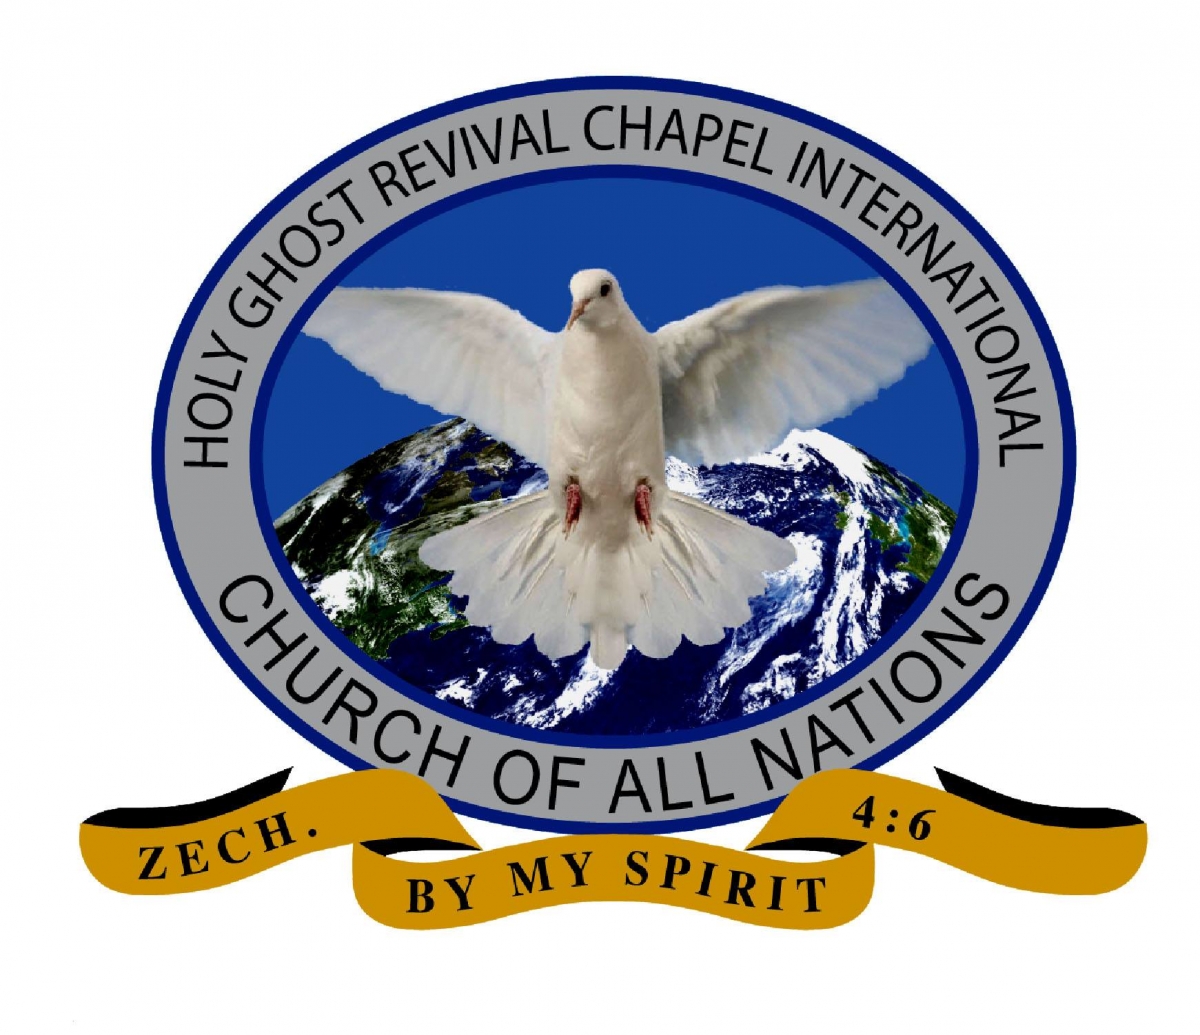 Holy Ghost Revival Chapel International Logo